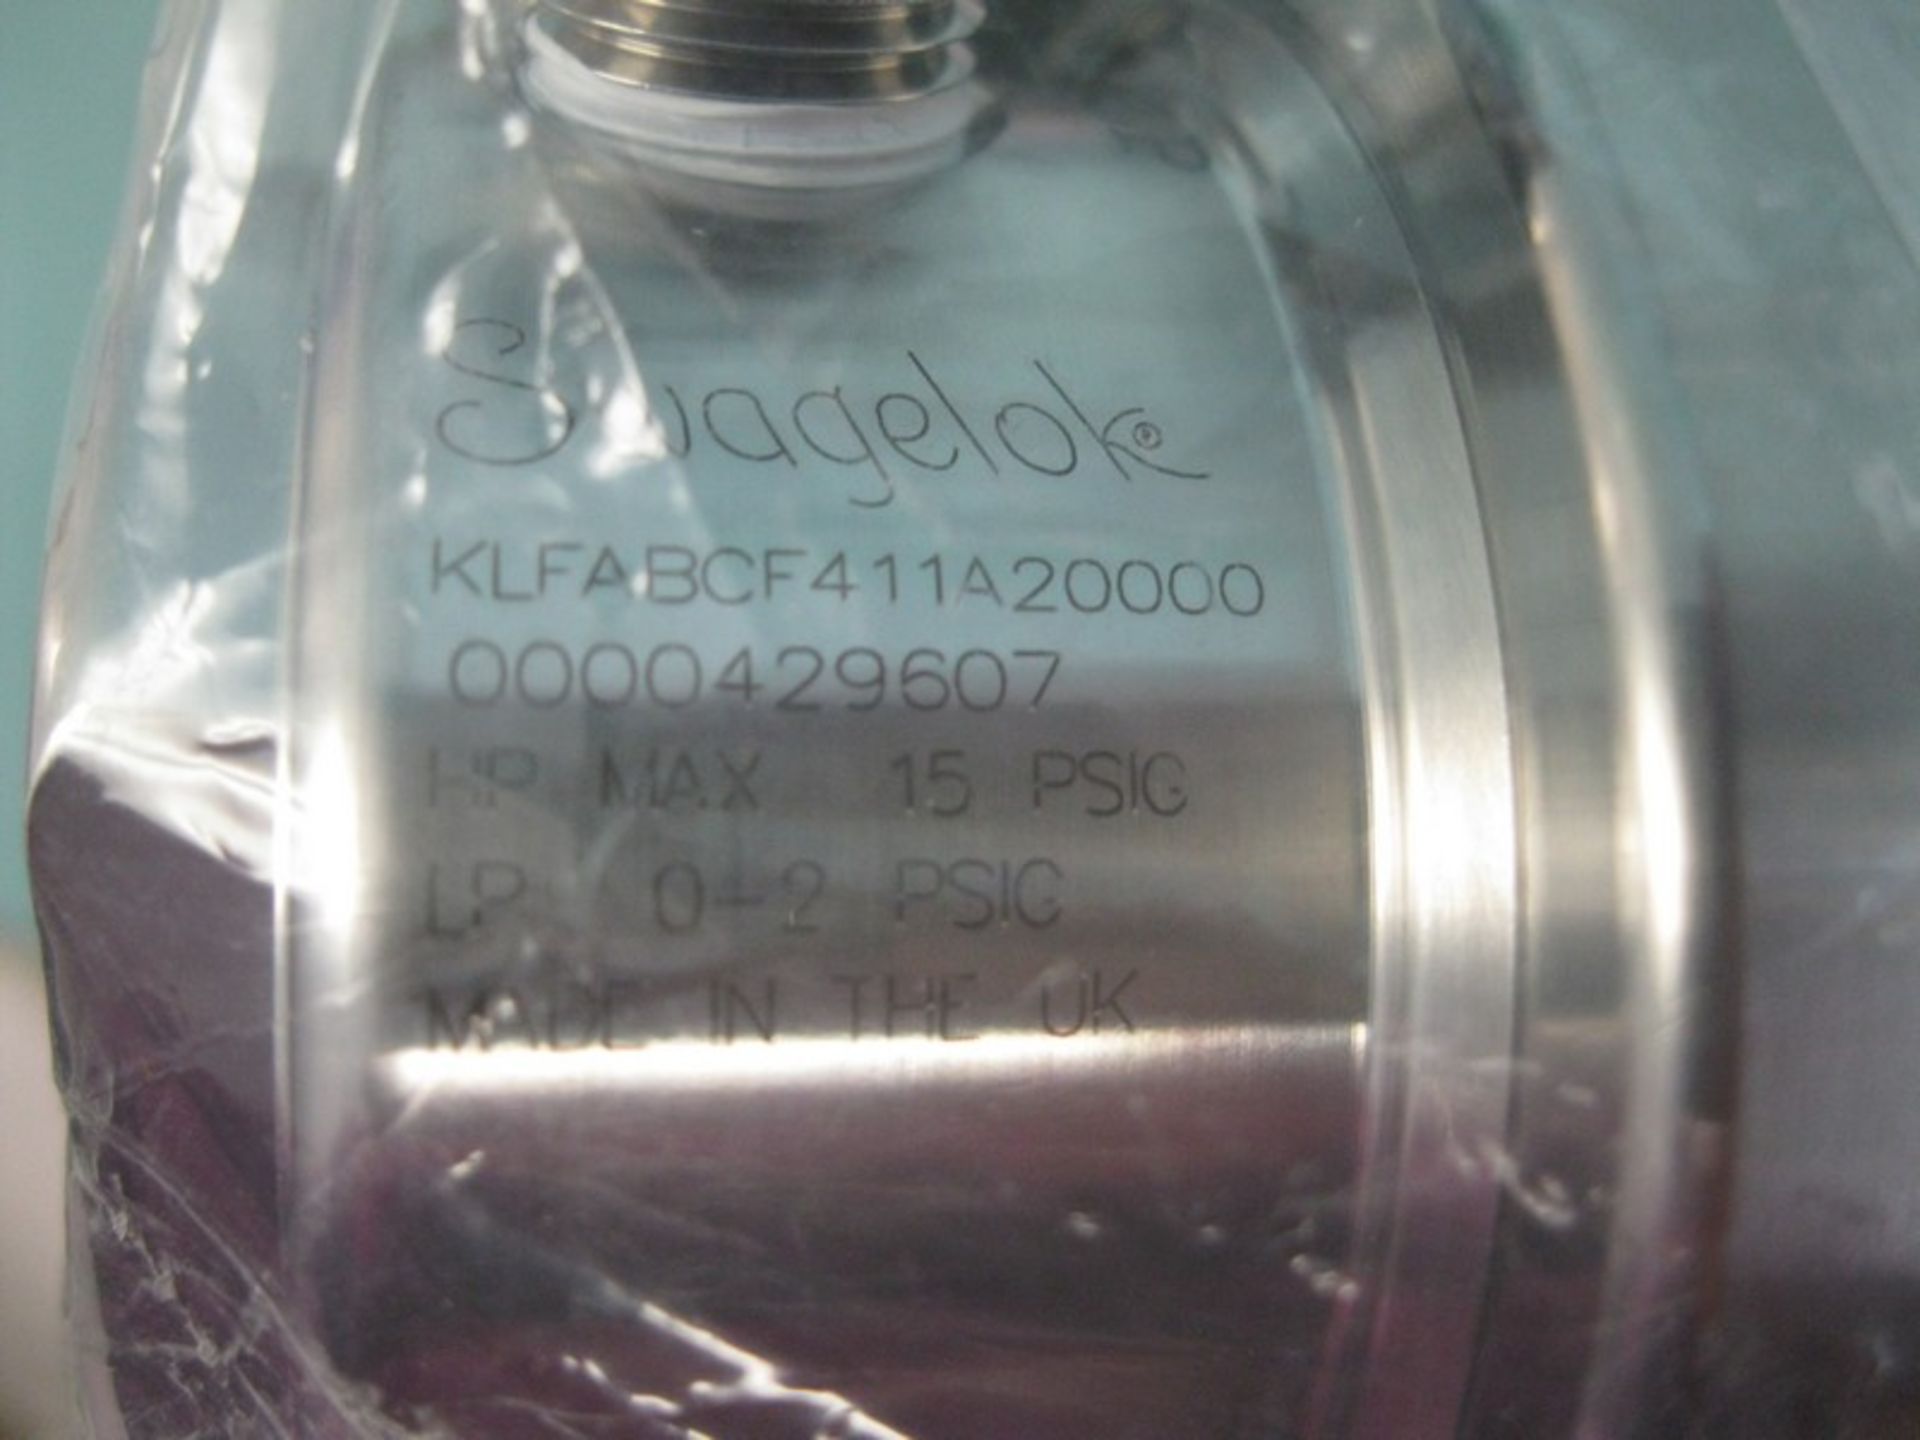 Lot (3) 1/4" Swagelok KLFABCF411A20000 Pressure Reducing Regulator KLF (NOTE: Packing and - Image 2 of 7